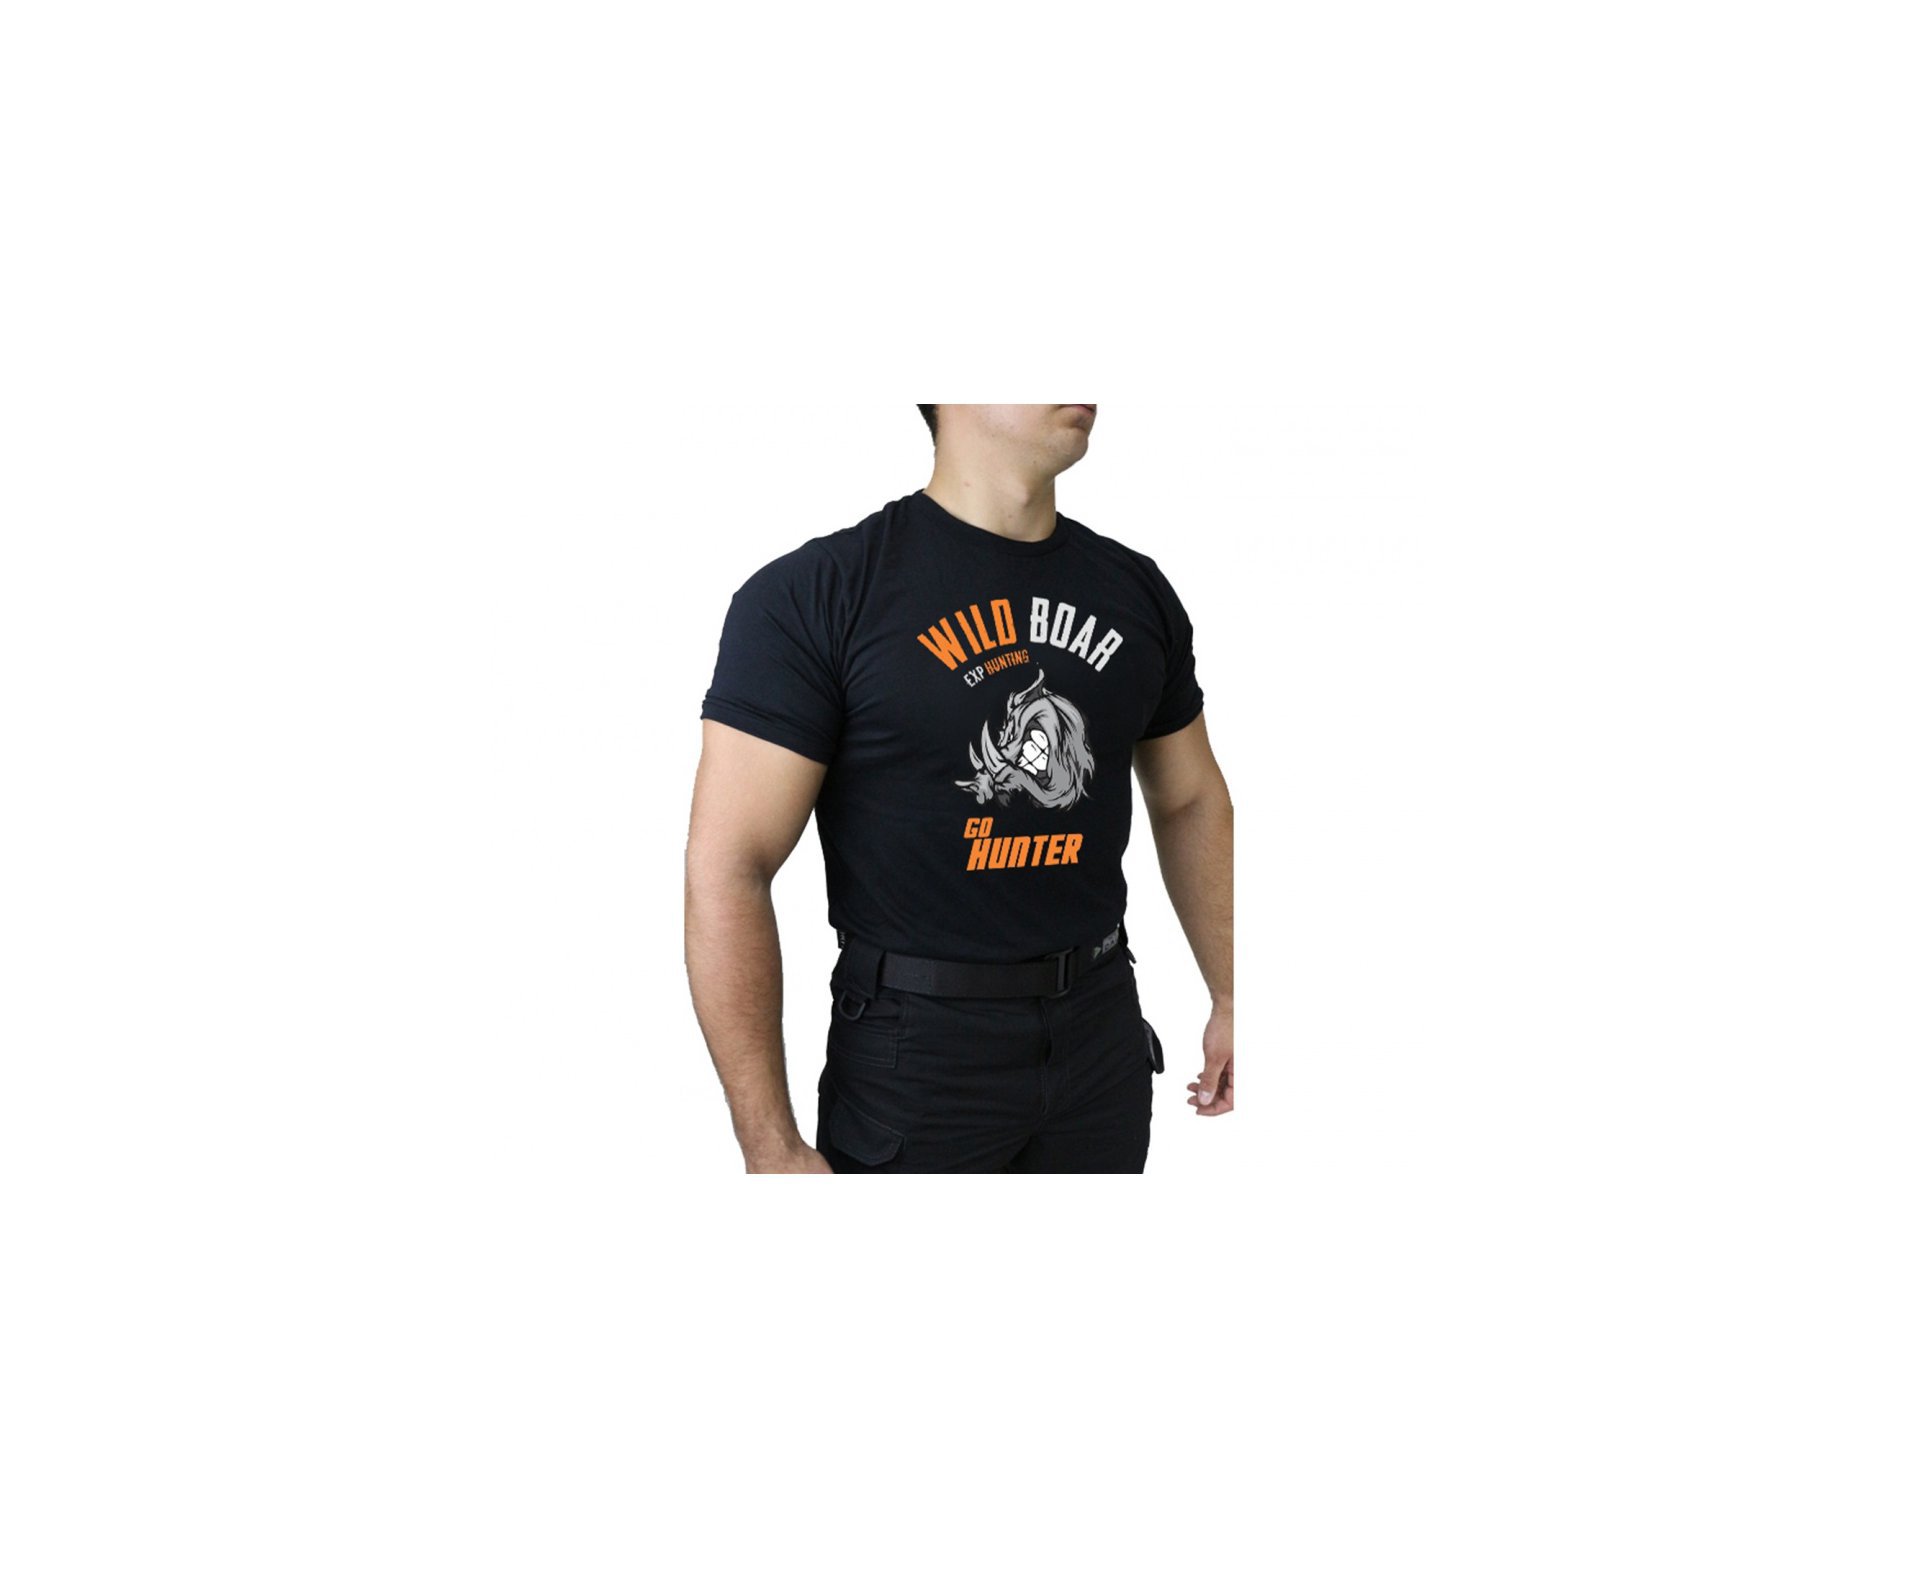 Camiseta Temática Hunting - 001 - Preto - Dacs - P